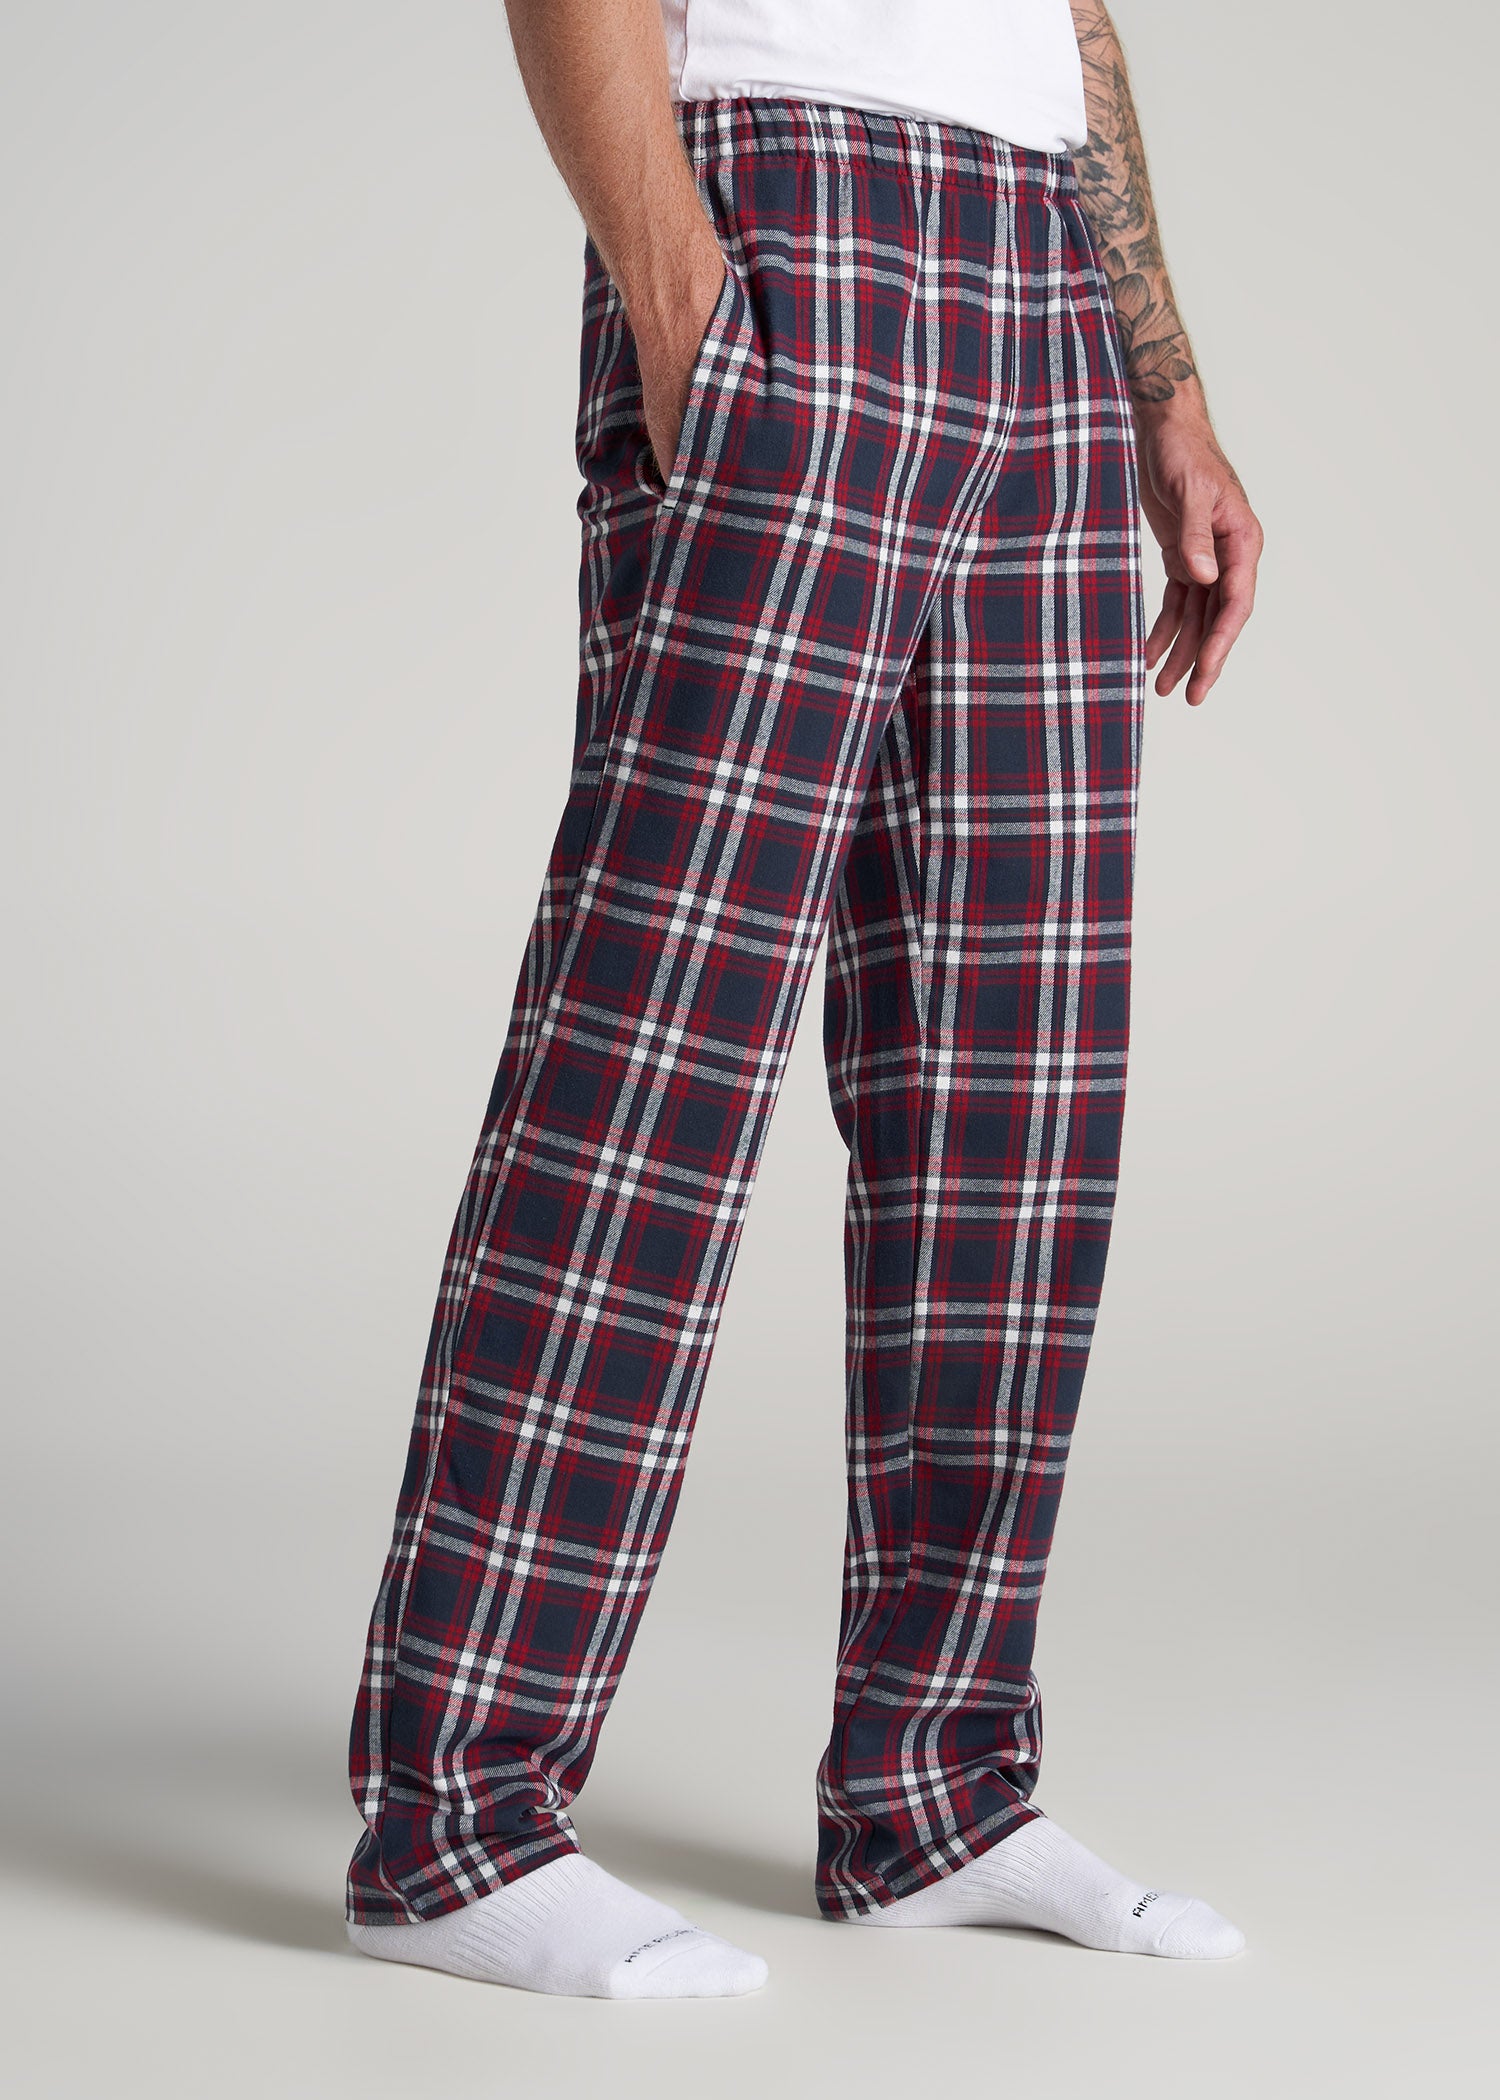 Men's Pajama Pants with Pockets Sleepwear Lounge Pants Stretch